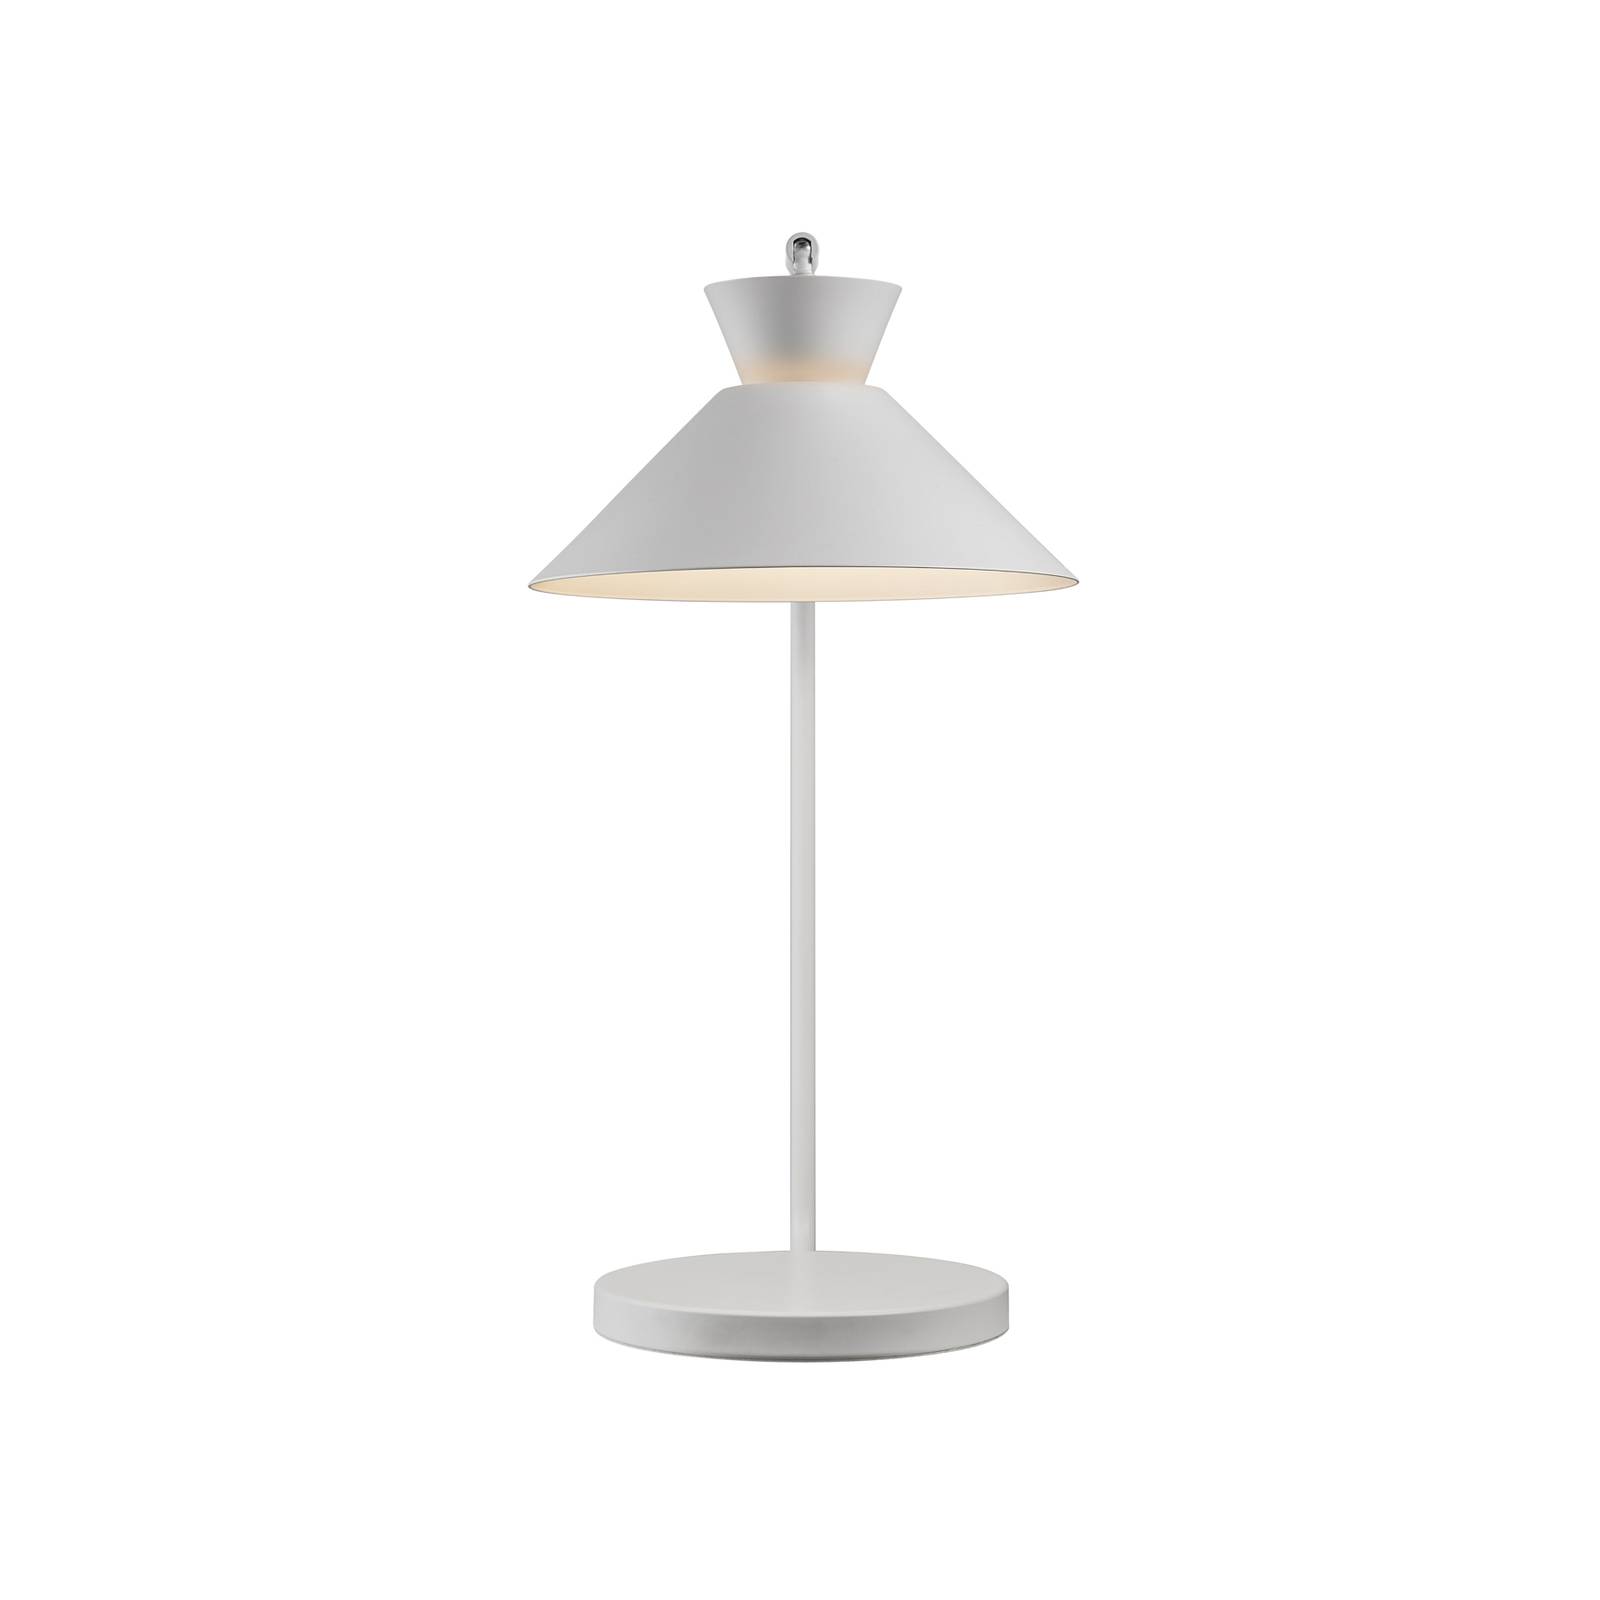 Dial bordlampe af metal, hvid